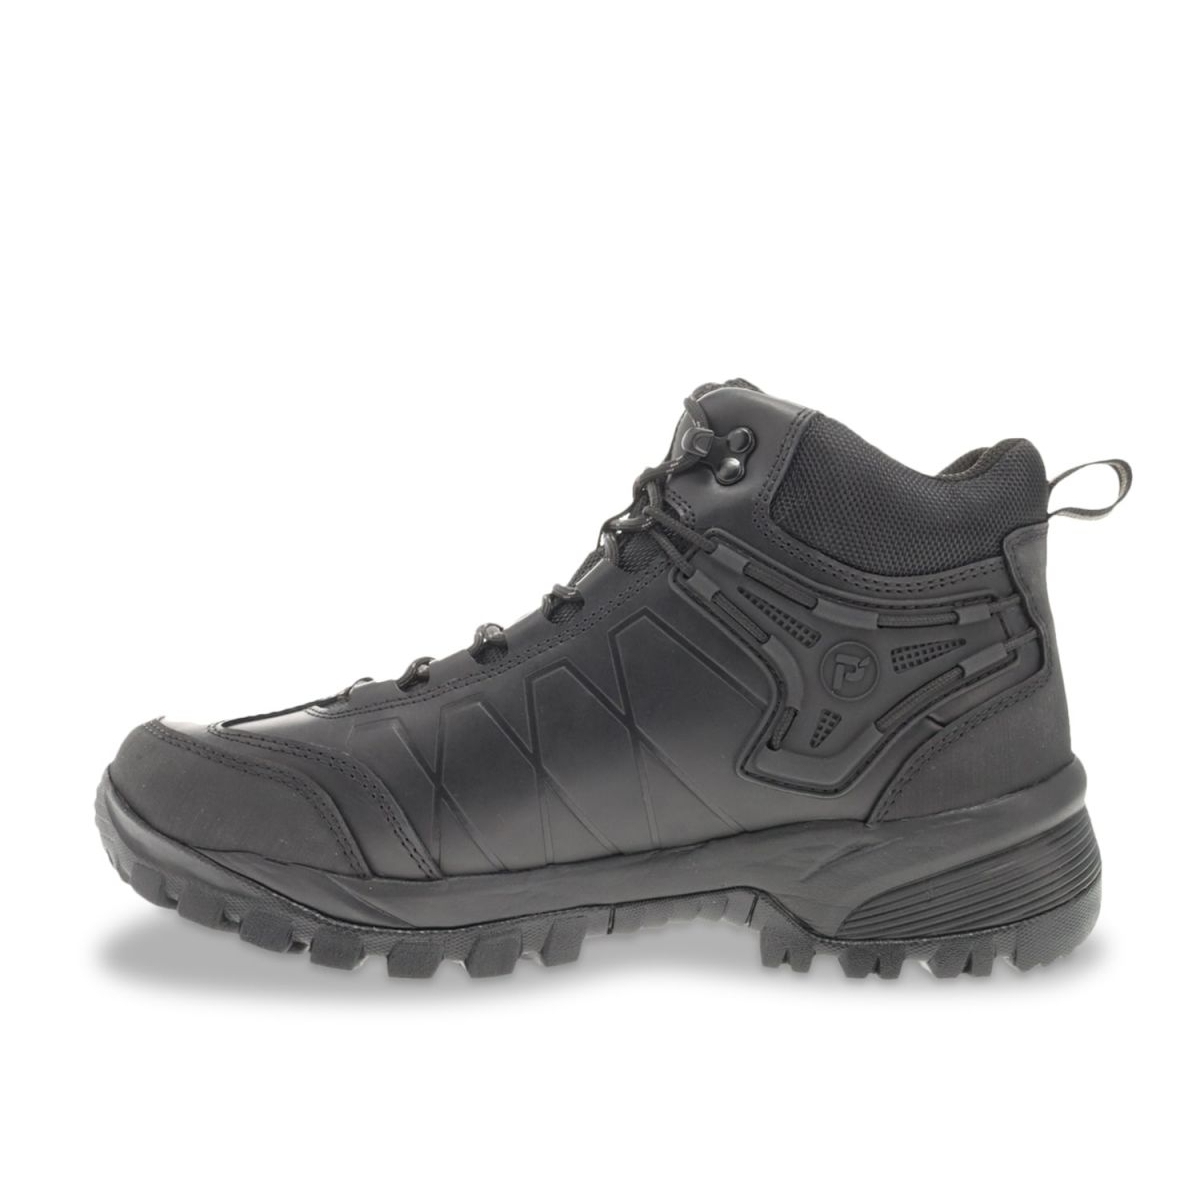 Propet Men's Ridge Walker Force Hiking Boots Black - MBA052LBLK BLACK - BLACK, 10.5